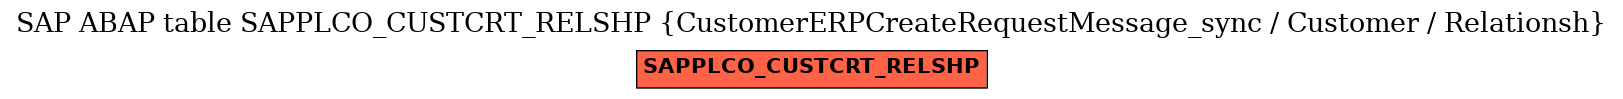 E-R Diagram for table SAPPLCO_CUSTCRT_RELSHP (CustomerERPCreateRequestMessage_sync / Customer / Relationsh)